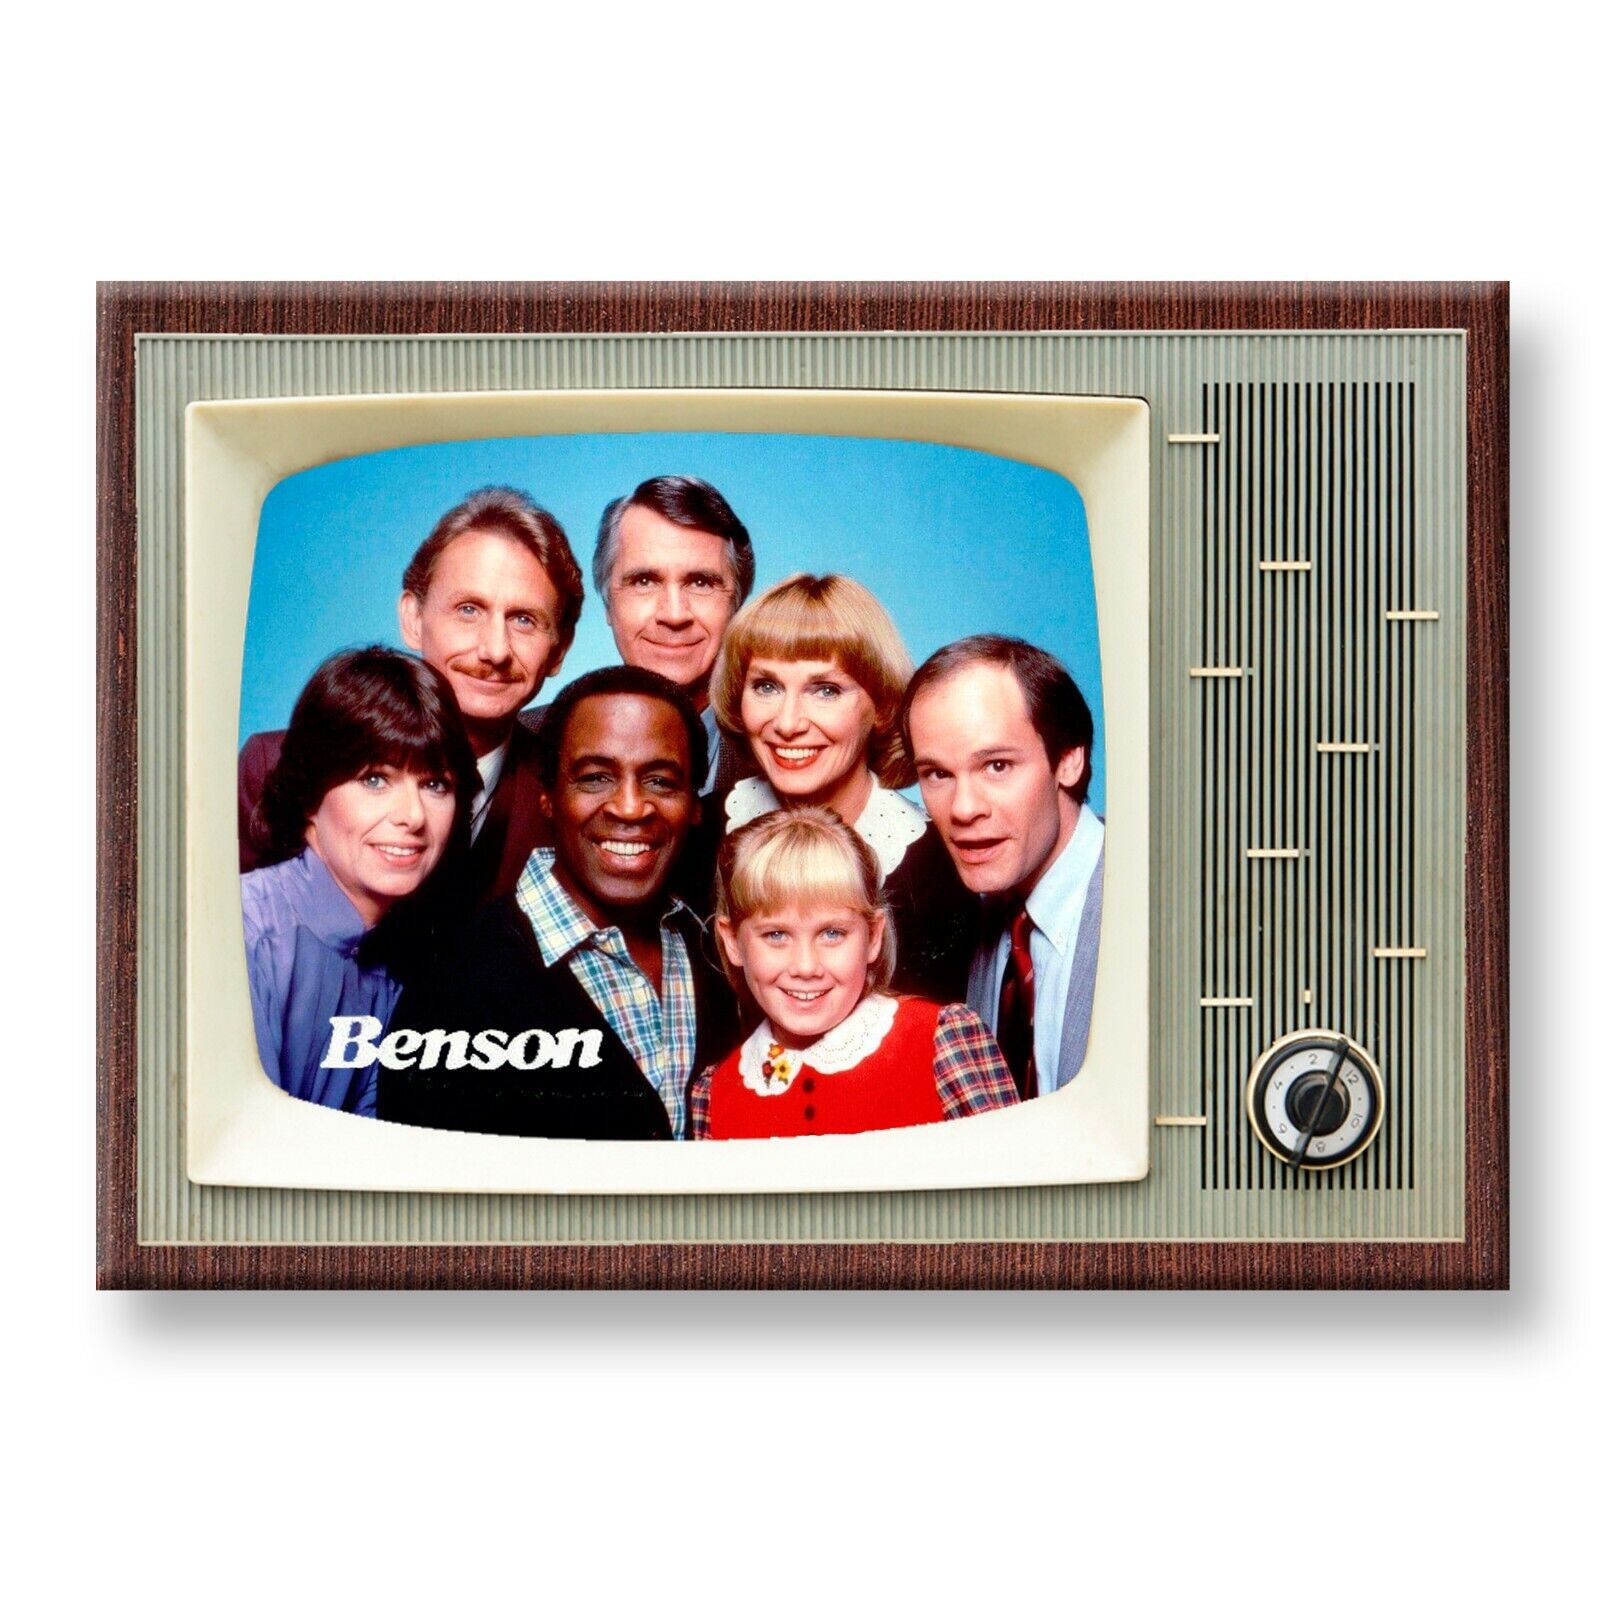 BENSON TV Show 3.5 inches x 2.5 inches FRIDGE MAGNET